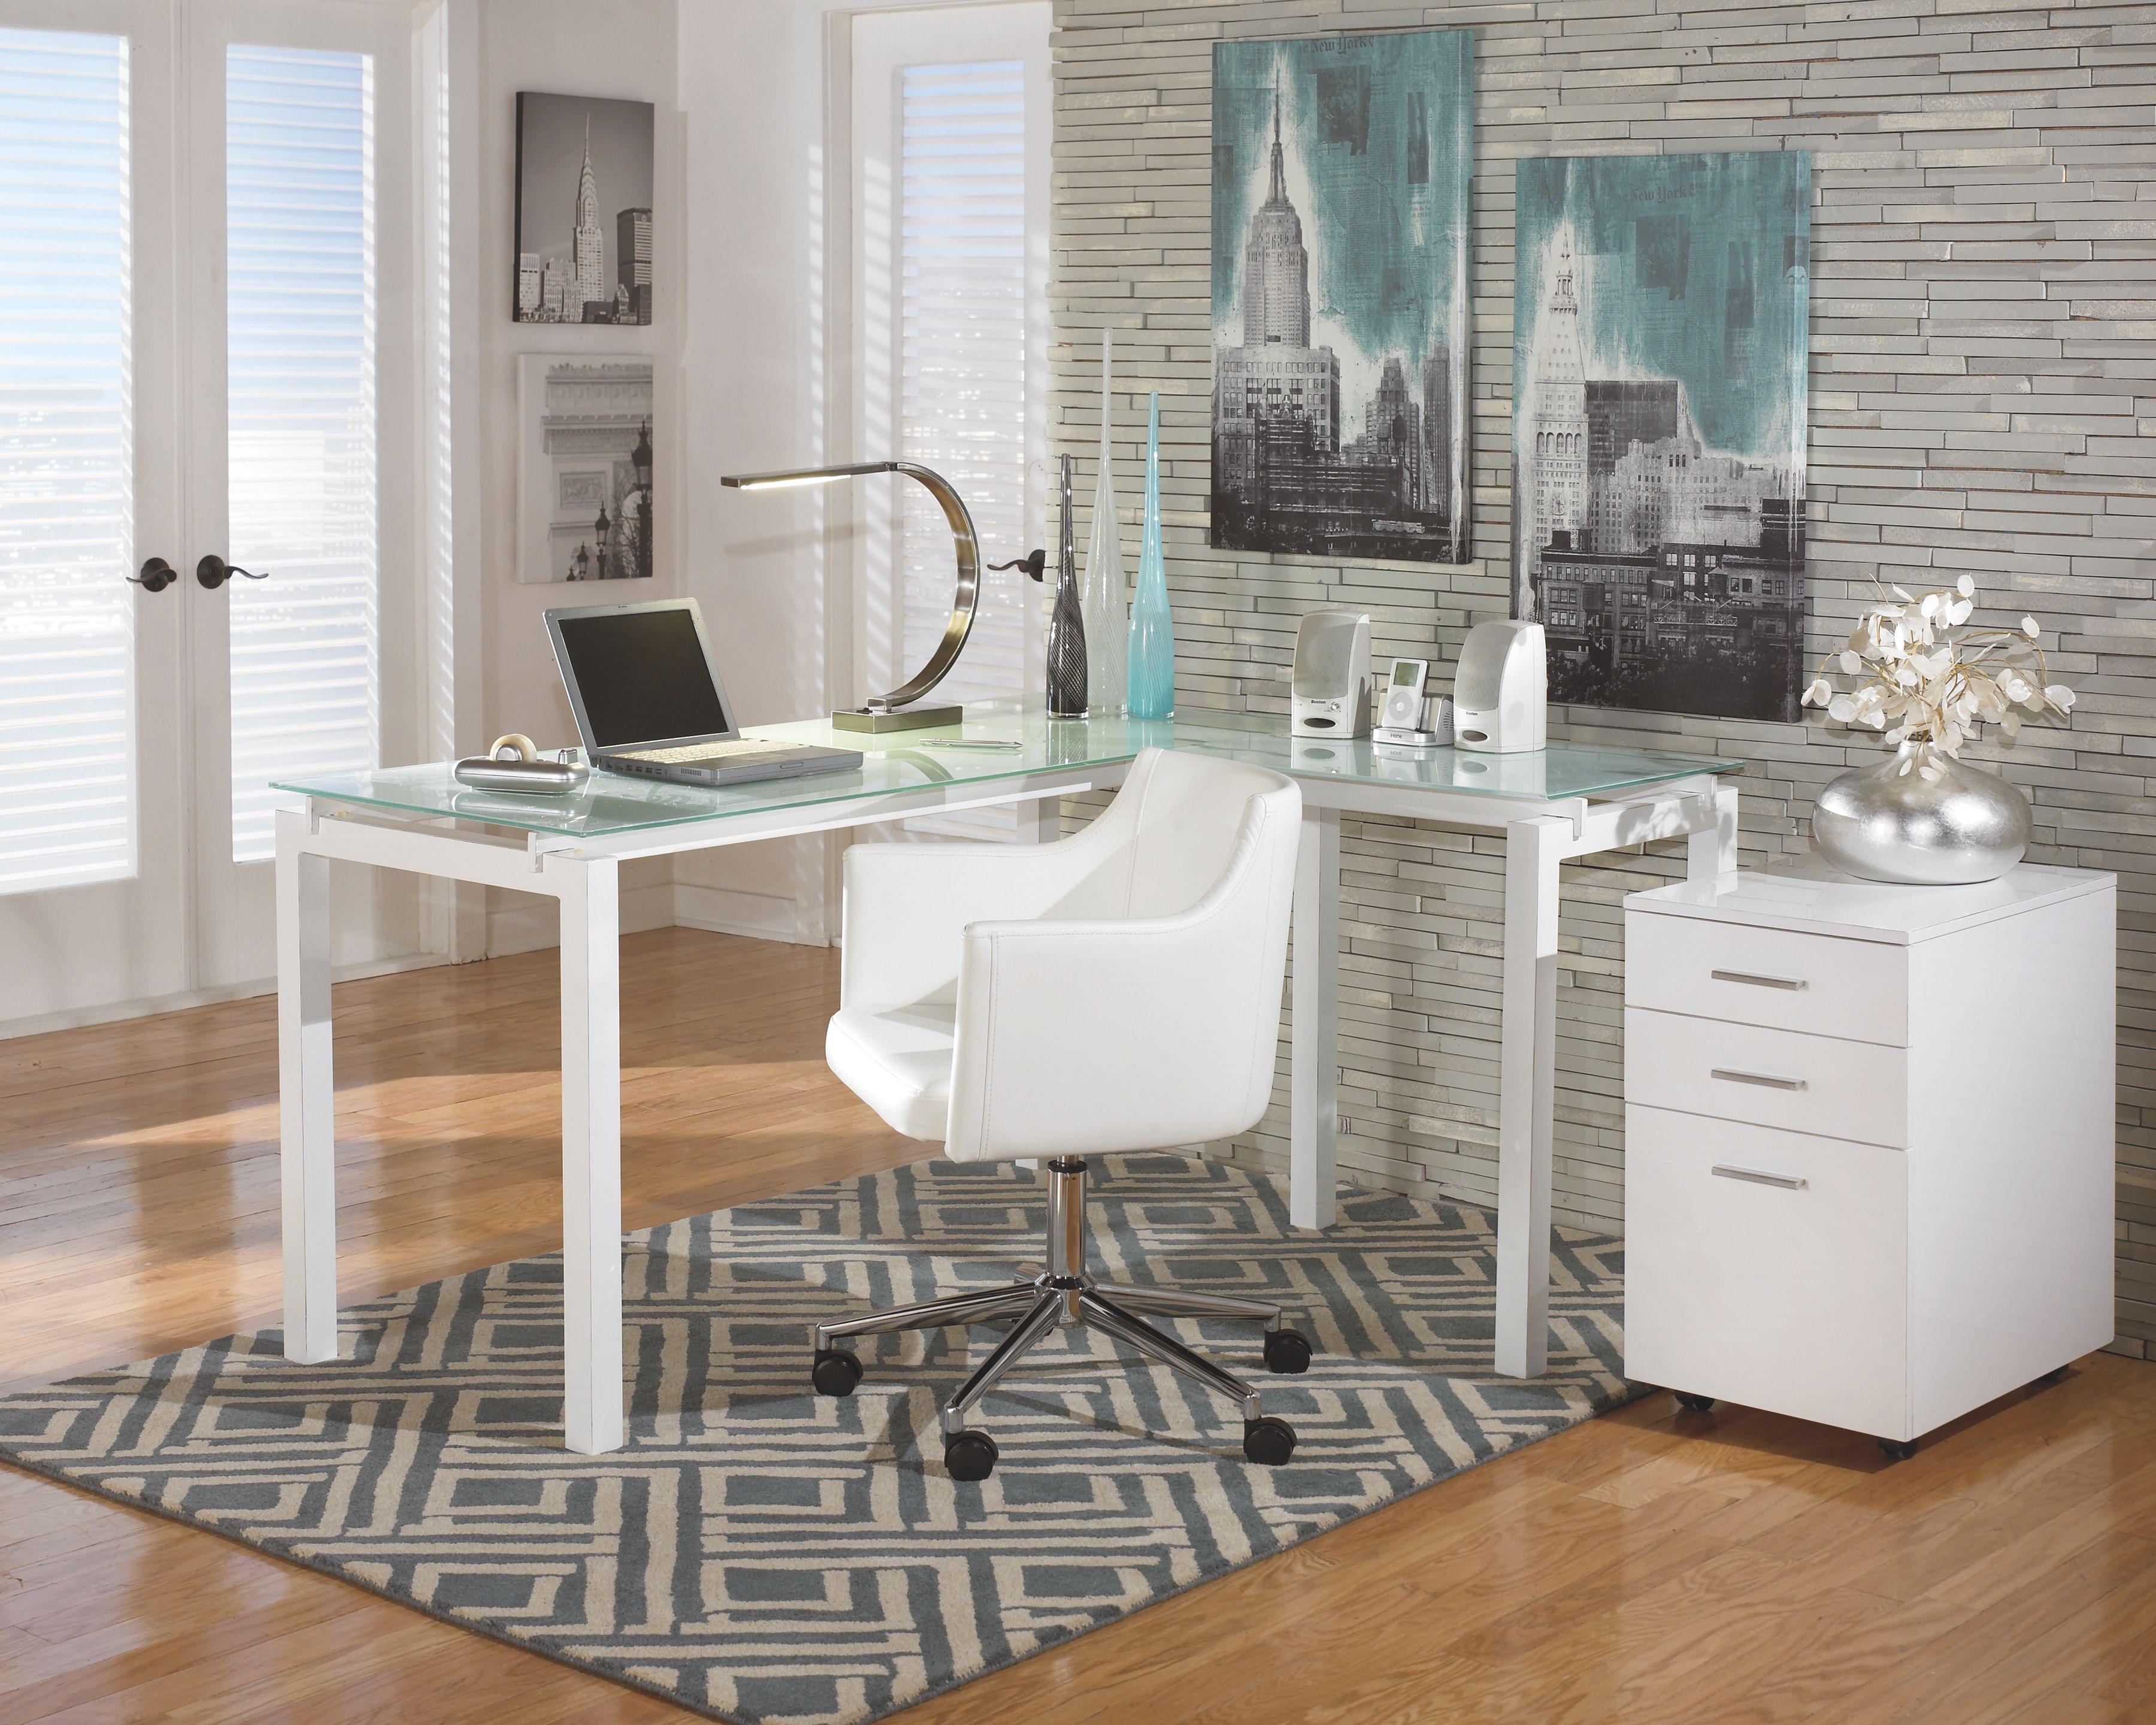 Ashley Furniture - Baraga - White - Home Office Swivel Desk Chair - 5th Avenue Furniture